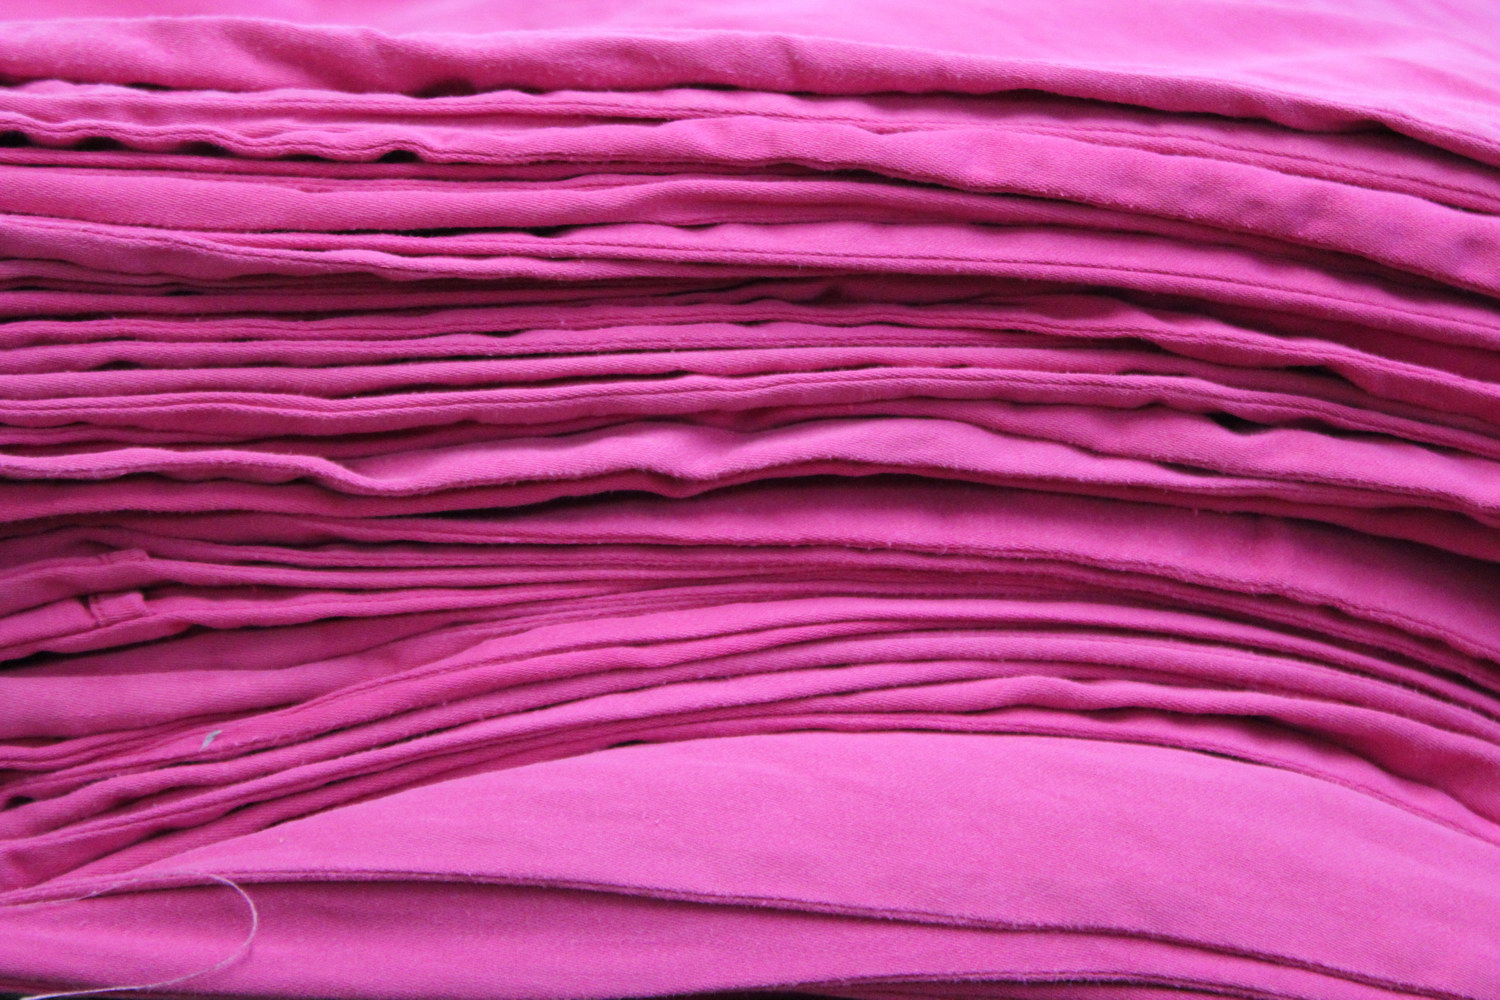 Texture shot. Photoshoot for CompleteWorkwear, November 2012.